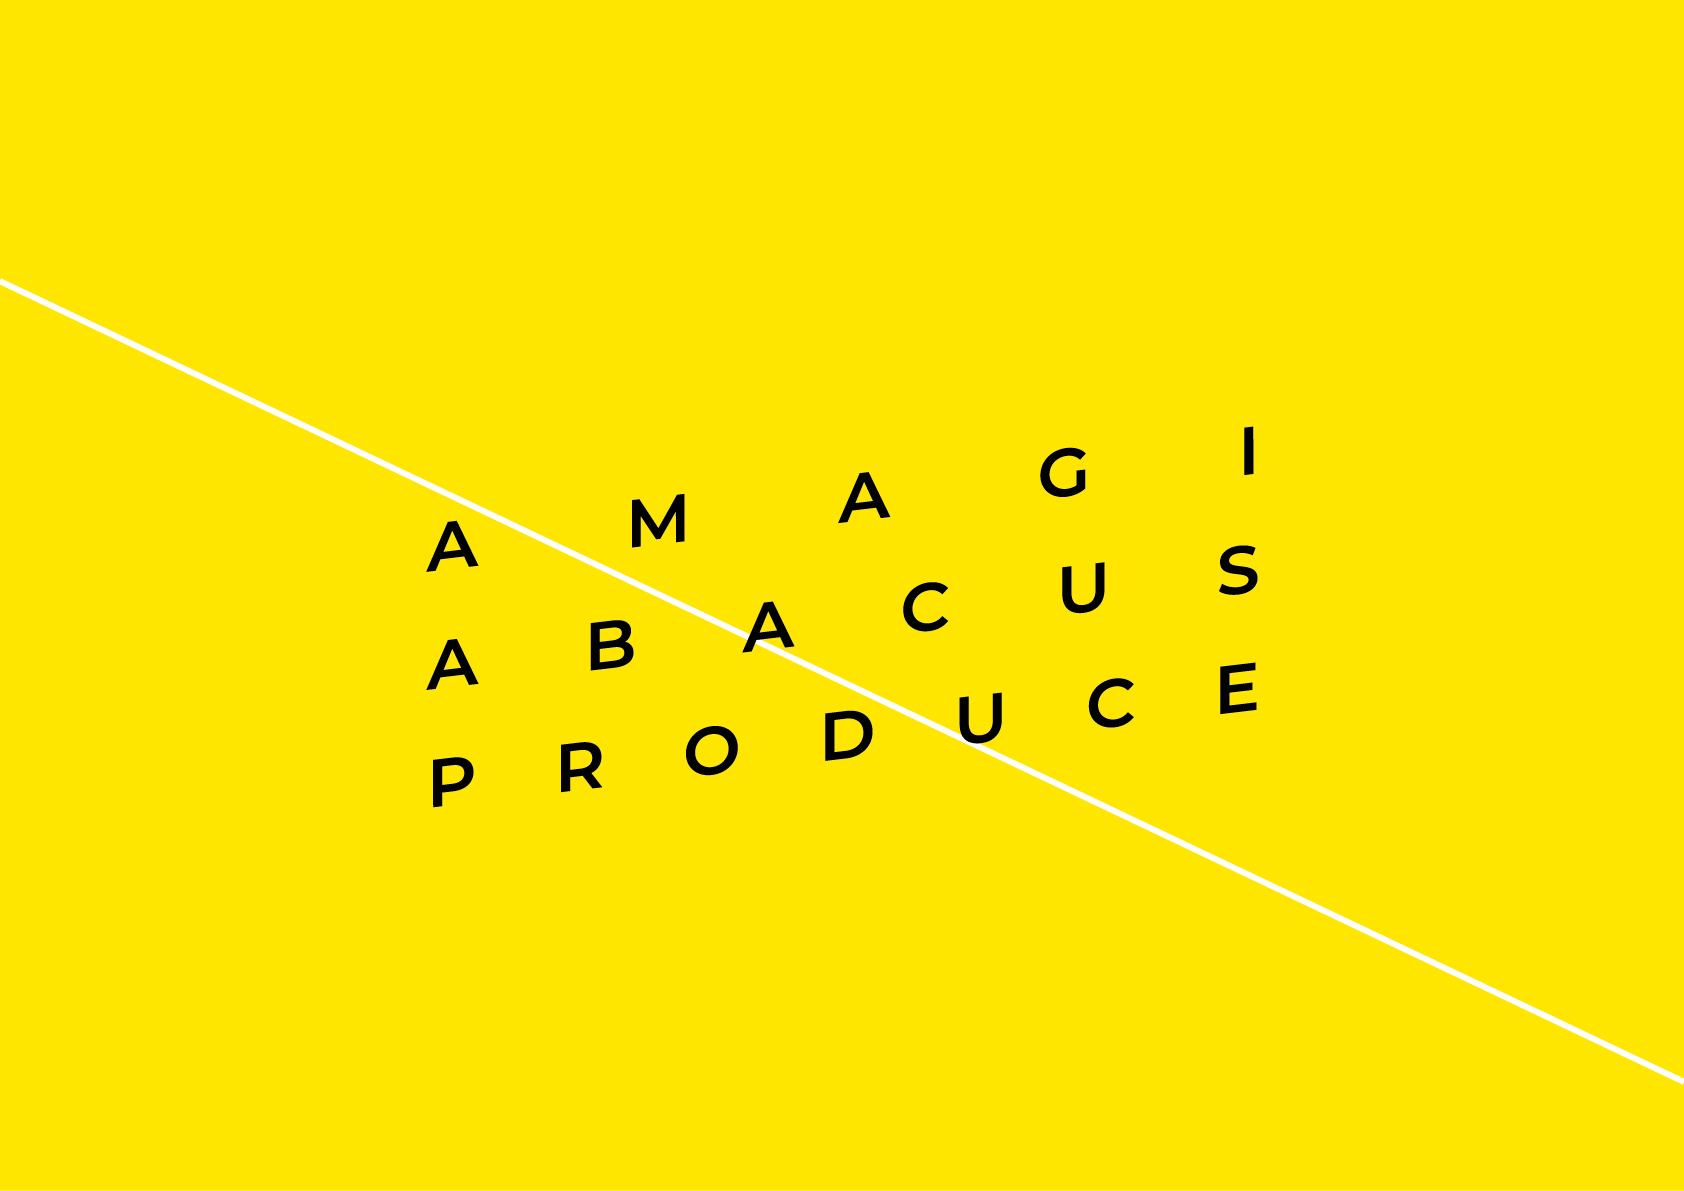 AMAGI ABACUS PRODUCE ビジュアル